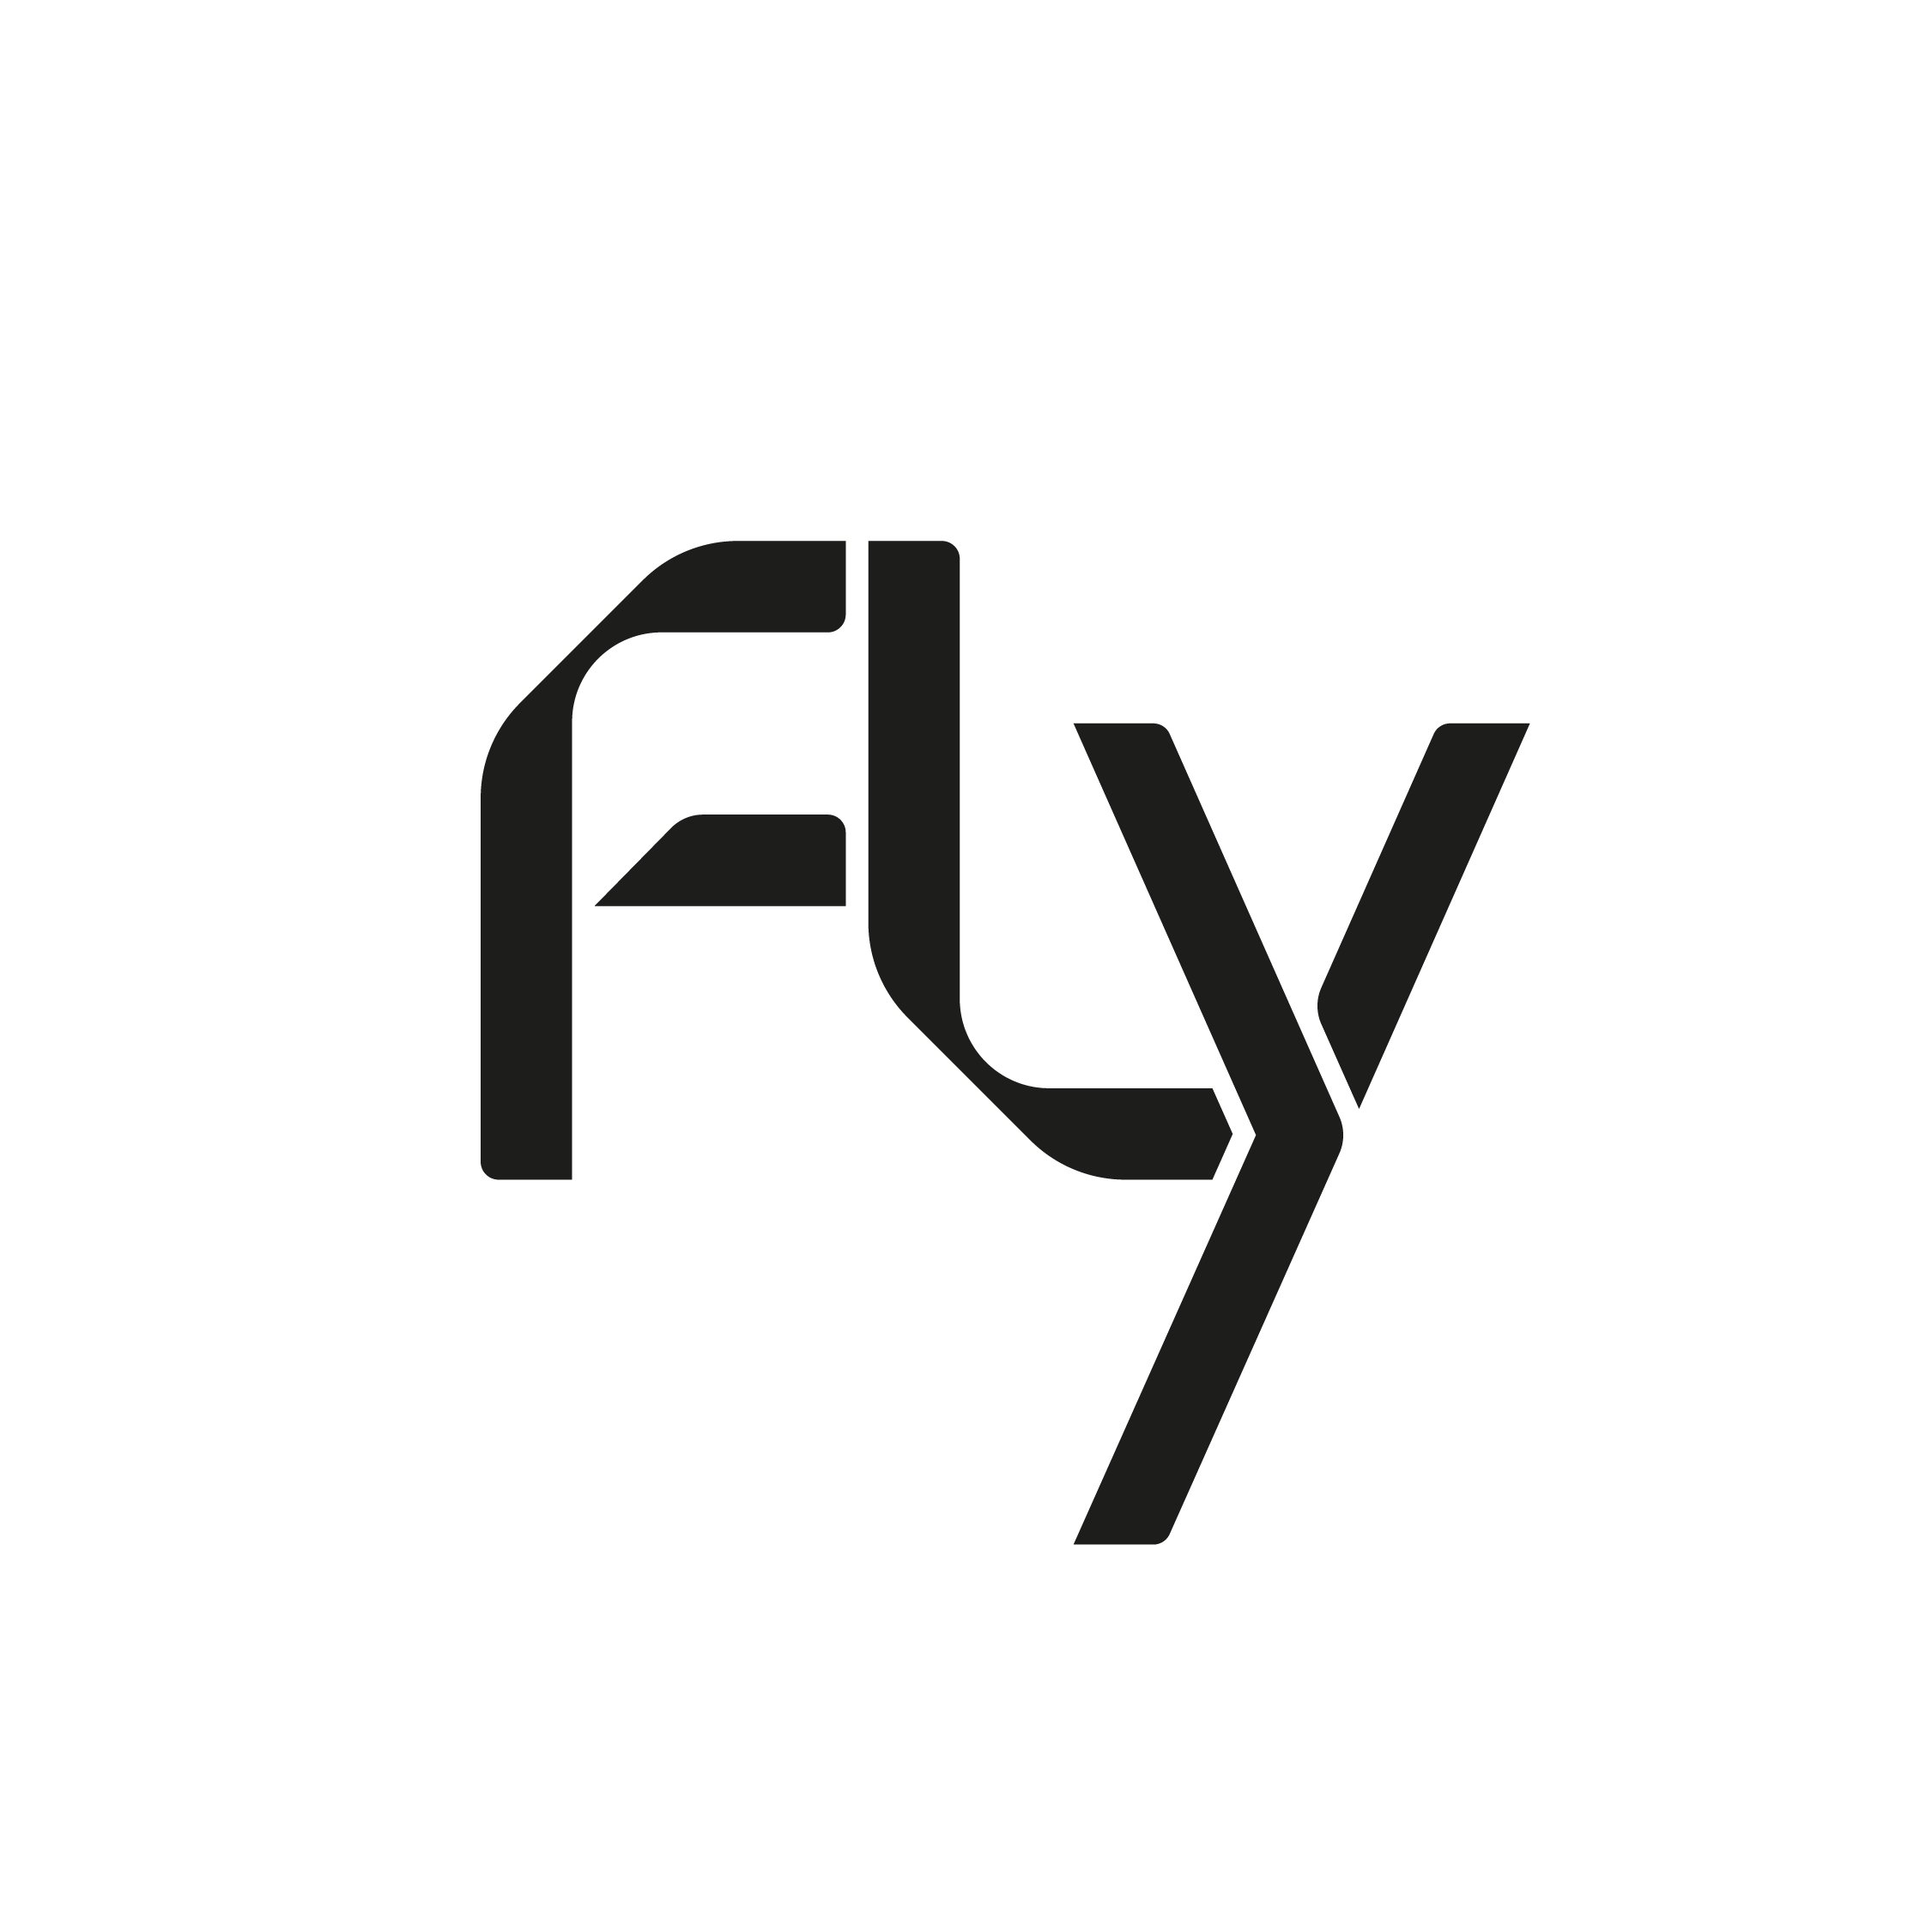 Fly_logo - black 2251x2251.png